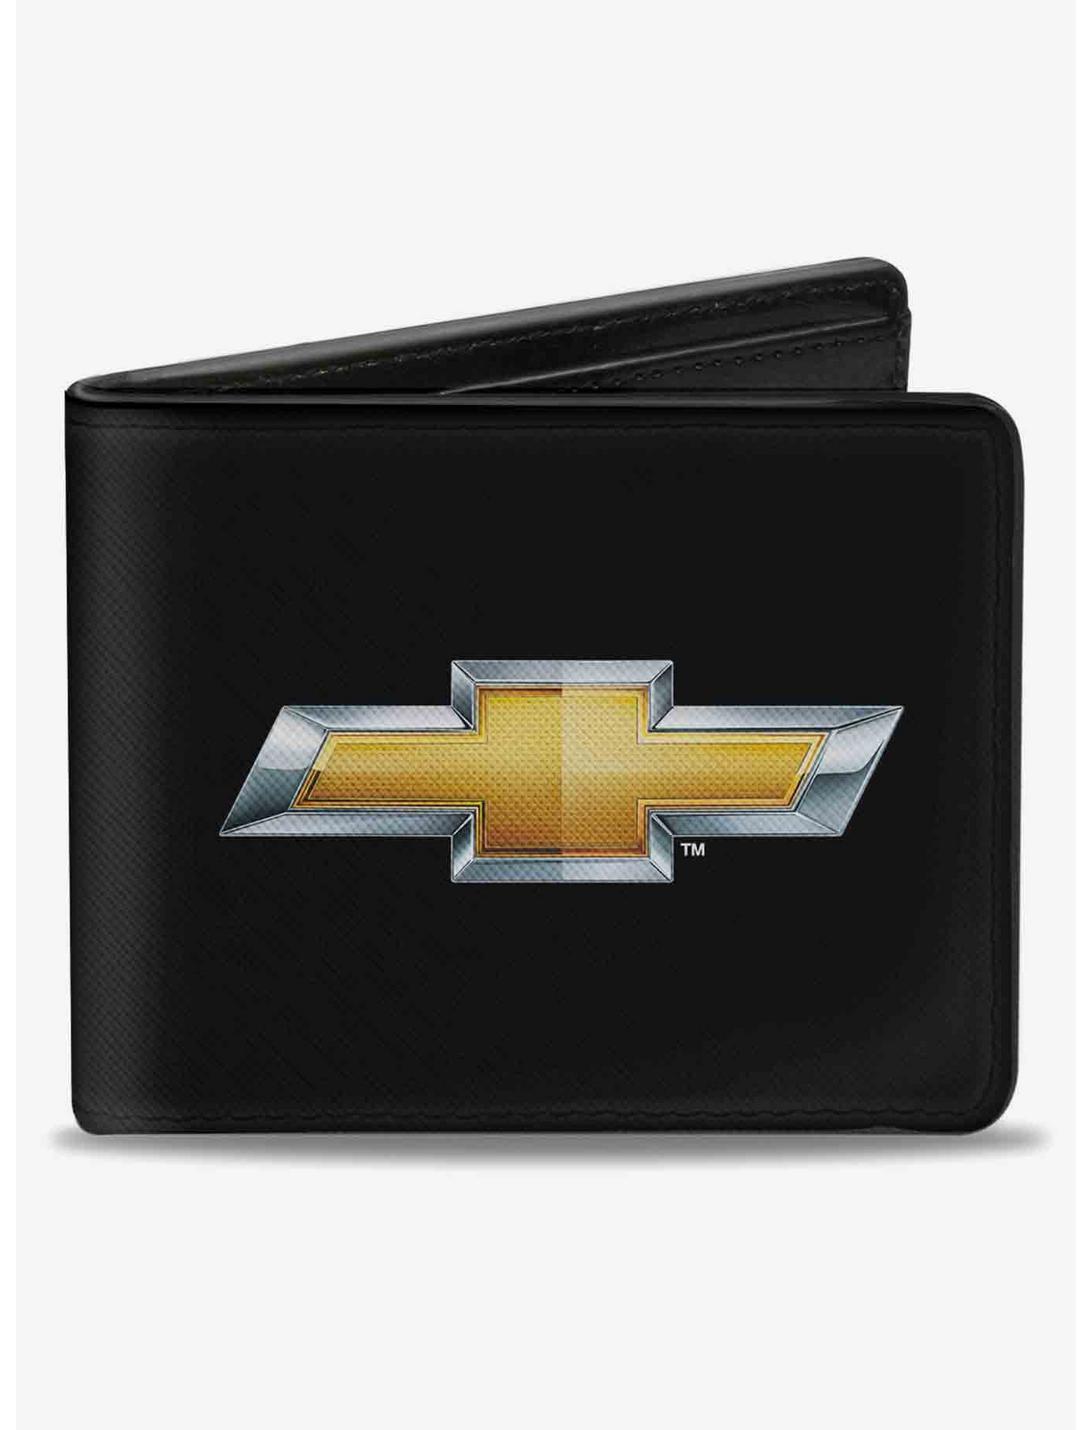 Chevy Bowtie Logo CenteBifold Wallet, , hi-res